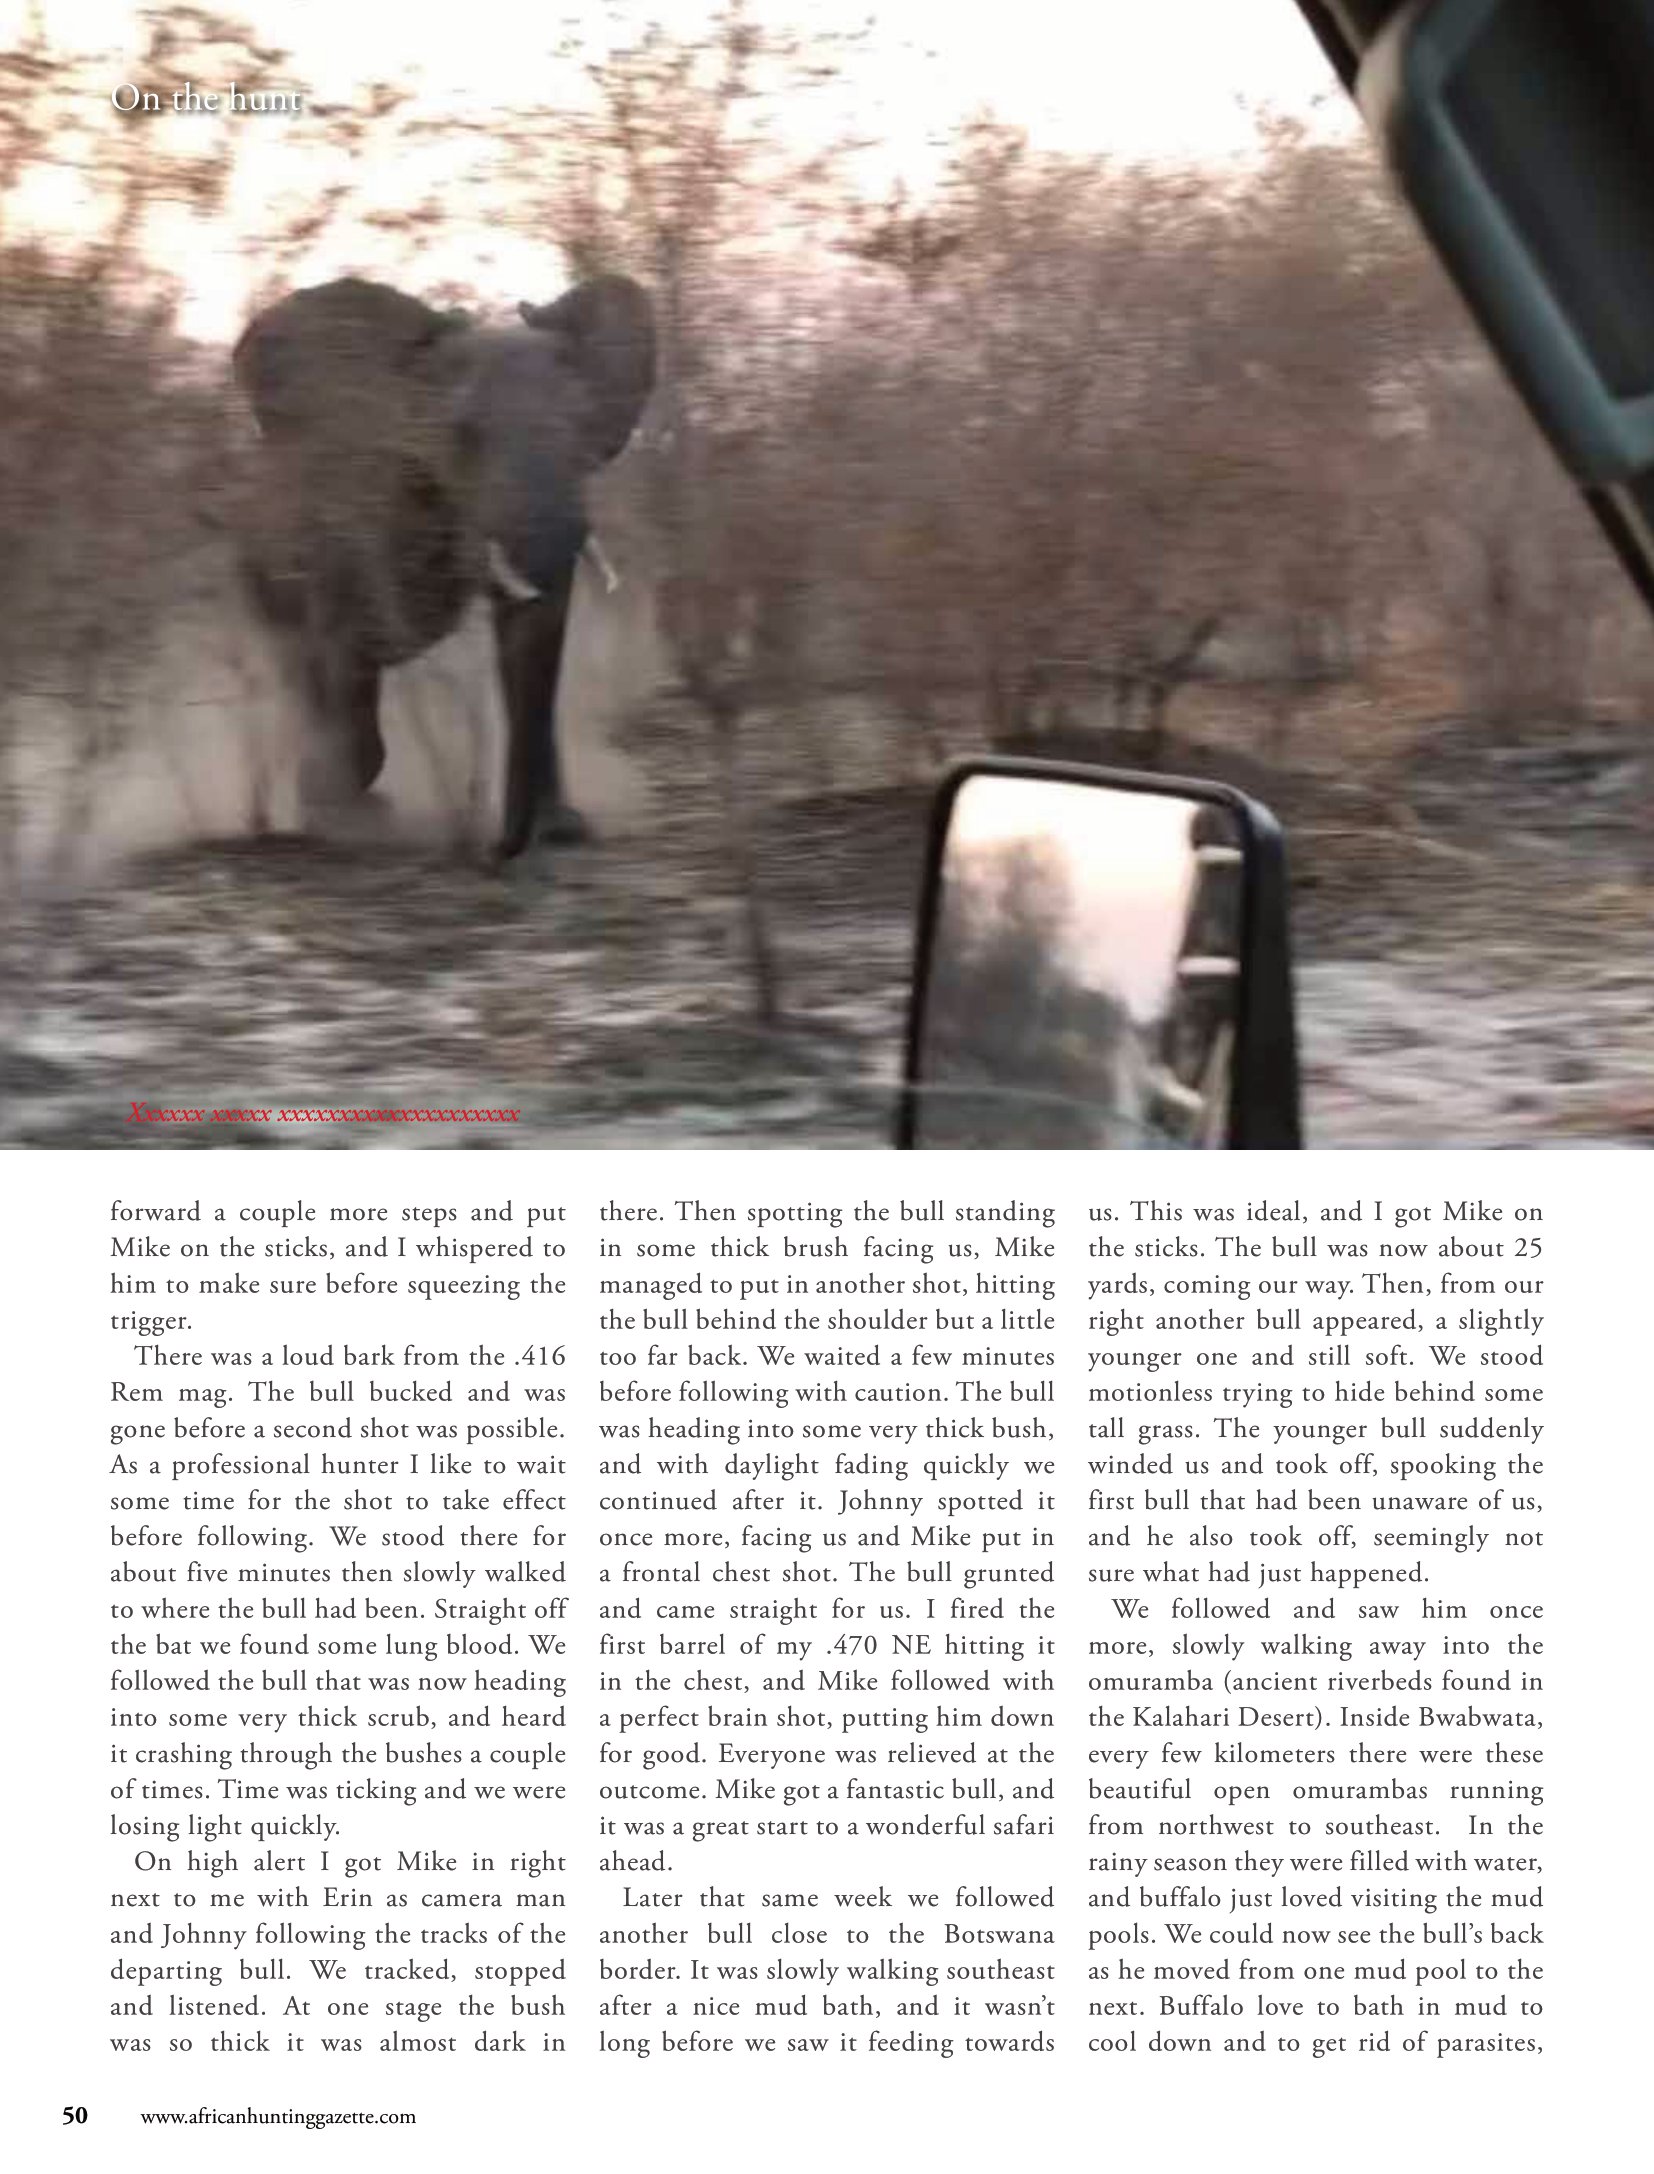 divan-safaris-elephant-hunt -5.jpg